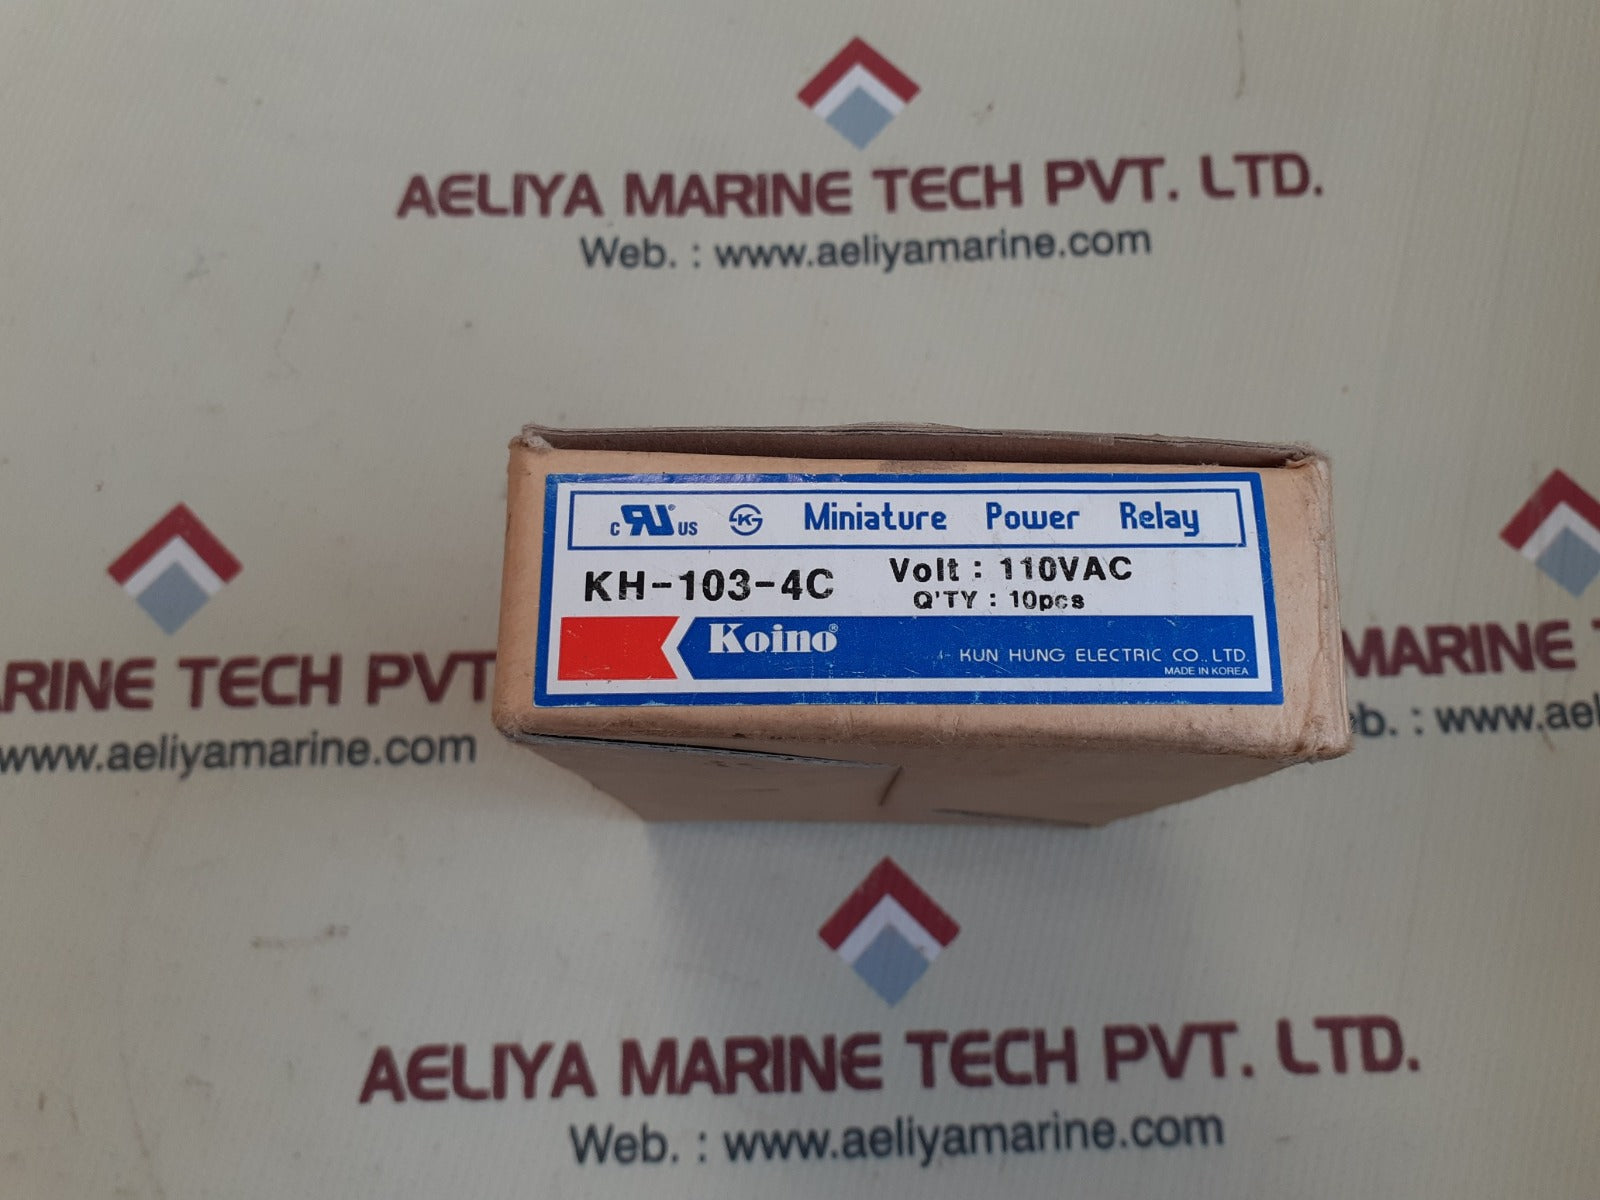 Set of 9x Koino kh-103-4c miniature power relay 110vac